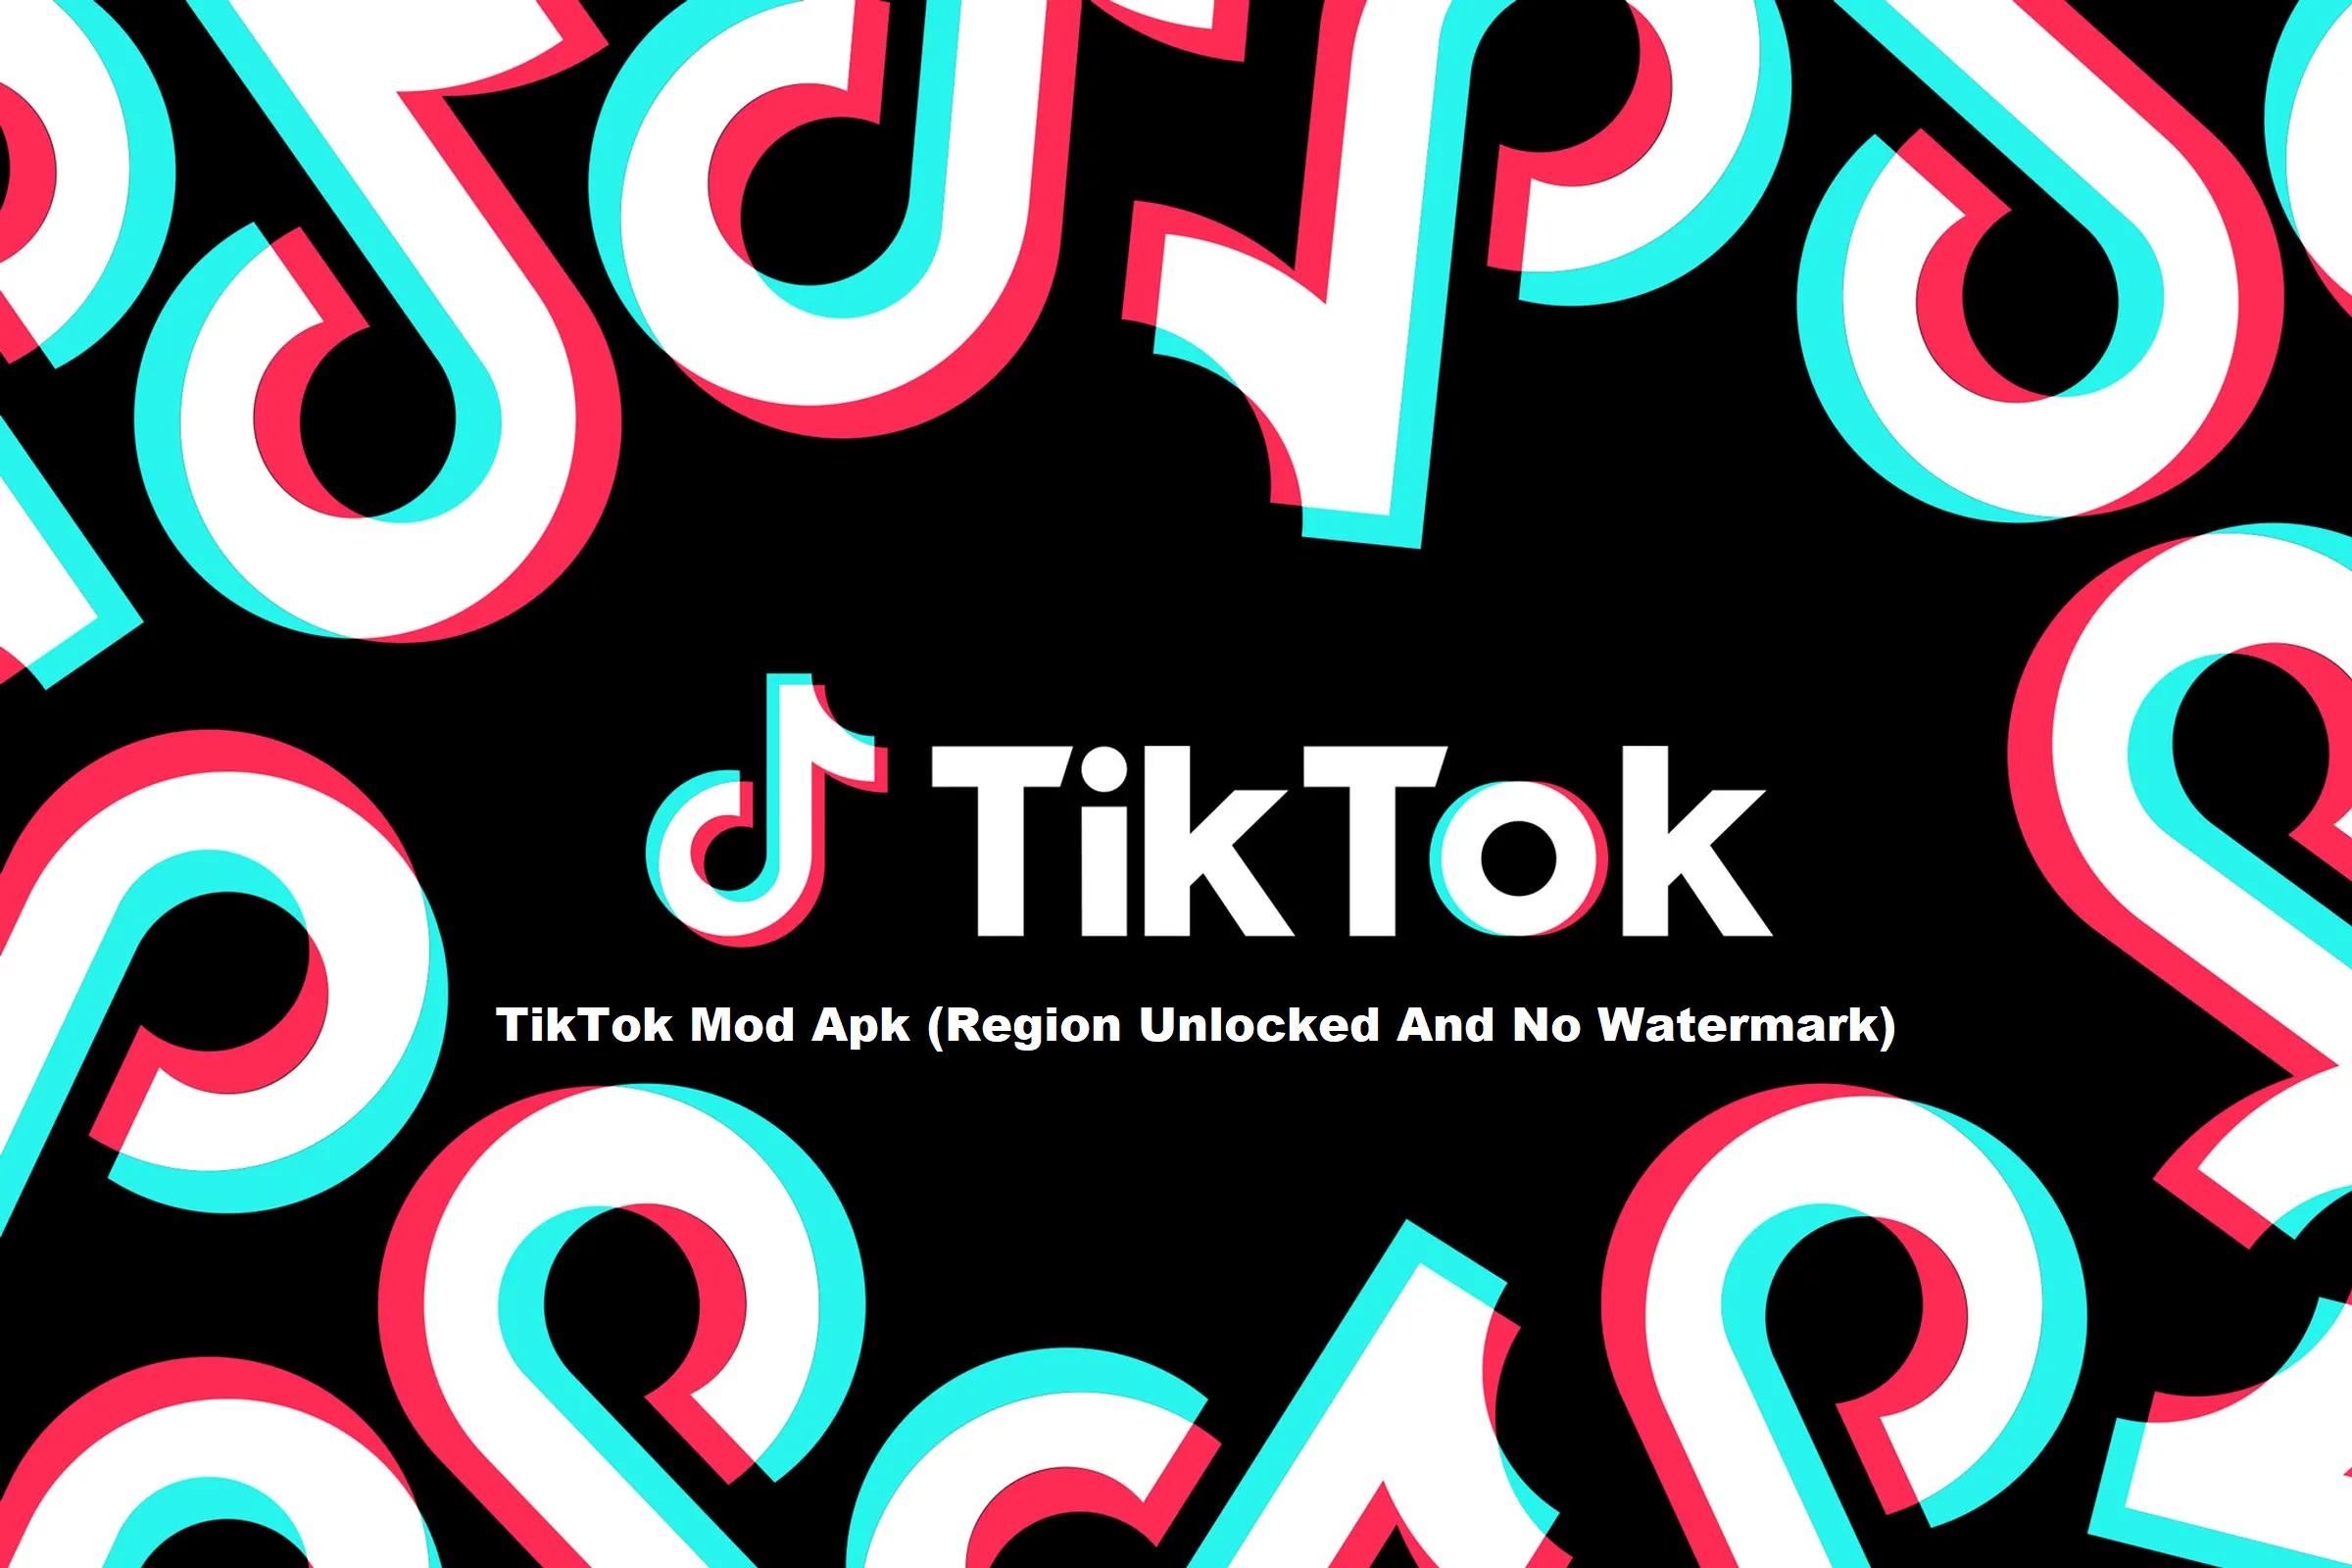 TikTok Mod Apk (Region Unlocked And No Watermark)